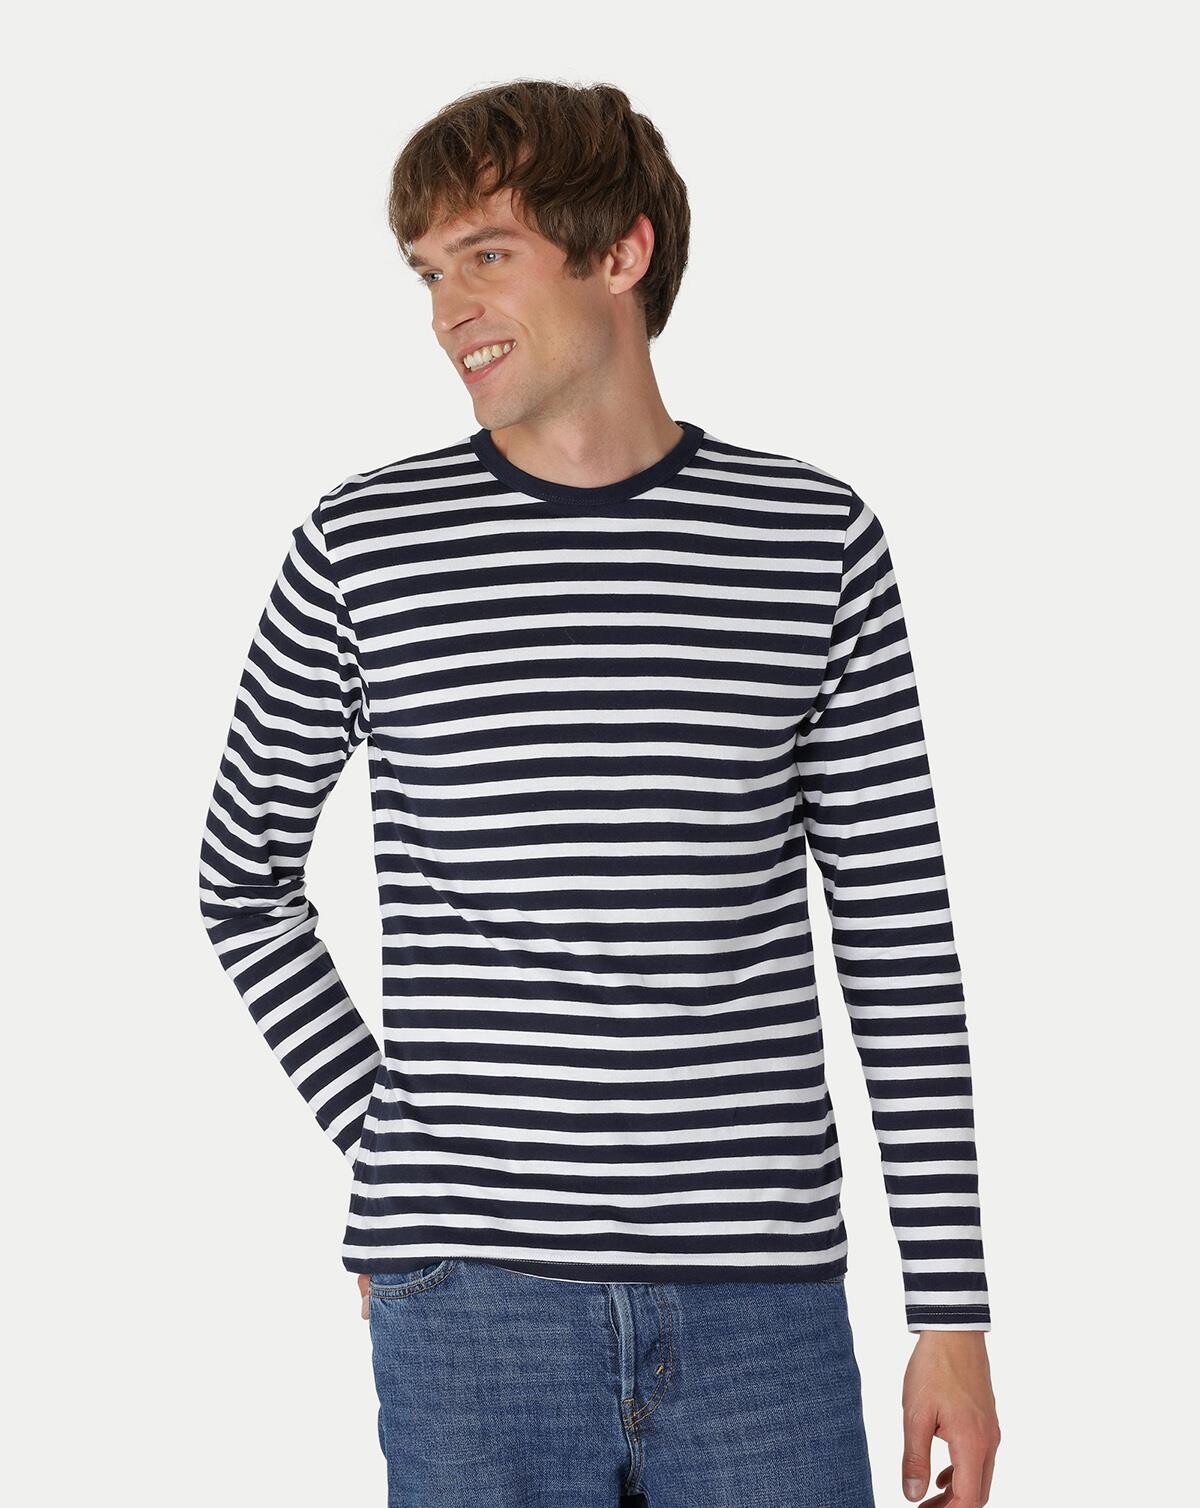 Neutral Økologisk - Herre Langærmet T-Shirt (Blå / Hvid stribet, XL)